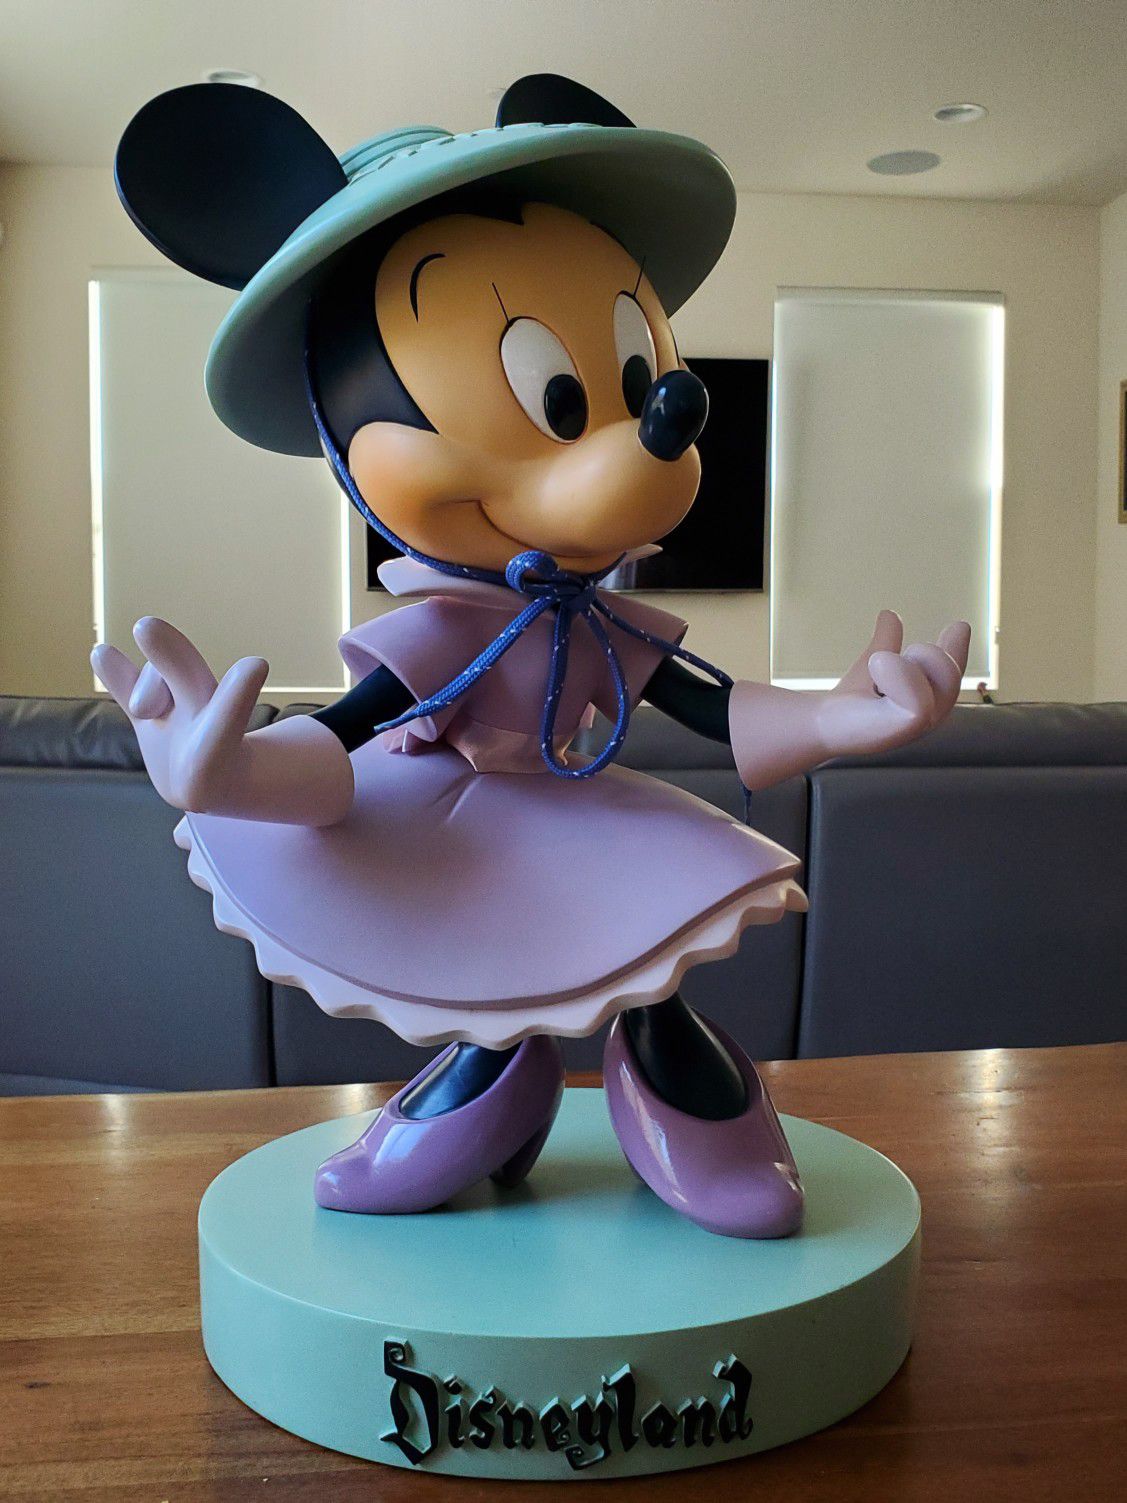 Disney Minnie Mouse at Disneyland Big Fig Collectible Figurine Statue Figure